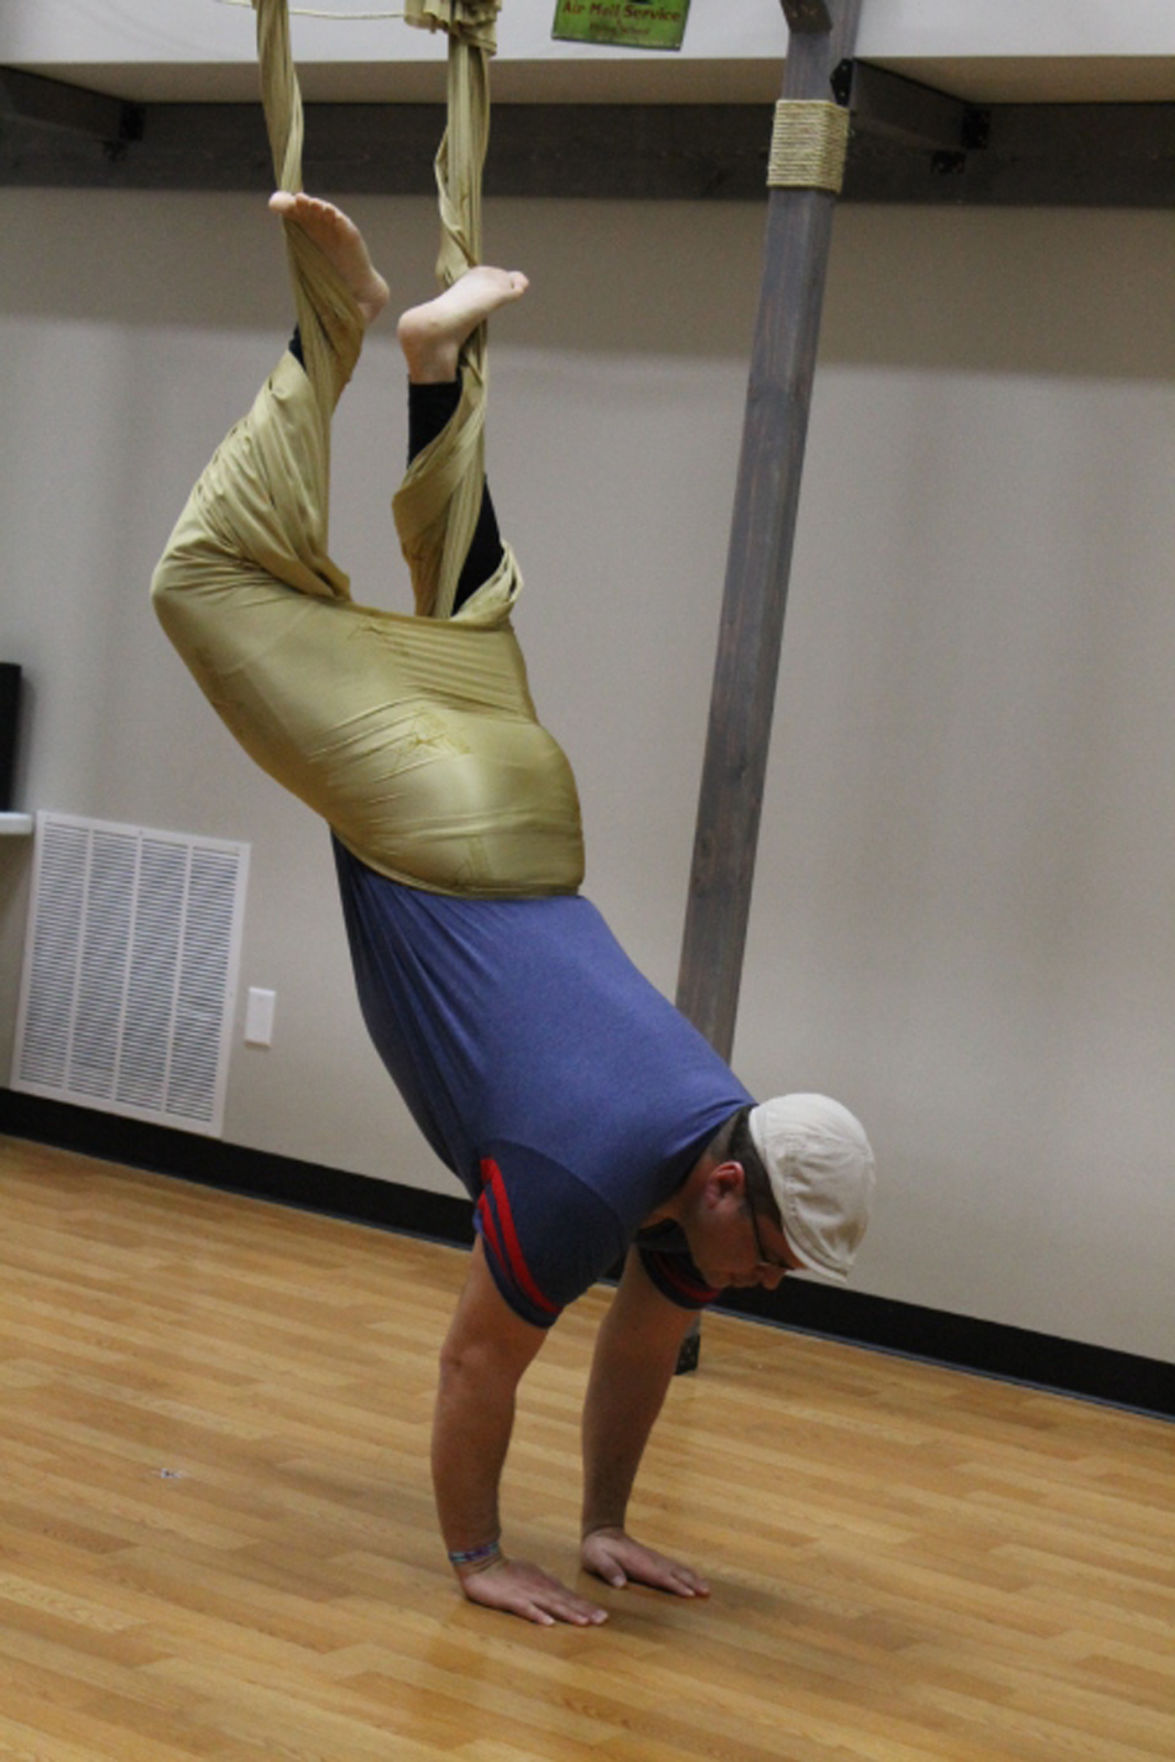 Aerial Yoga combines aerobics, yoga and silk hammocks at K-Town